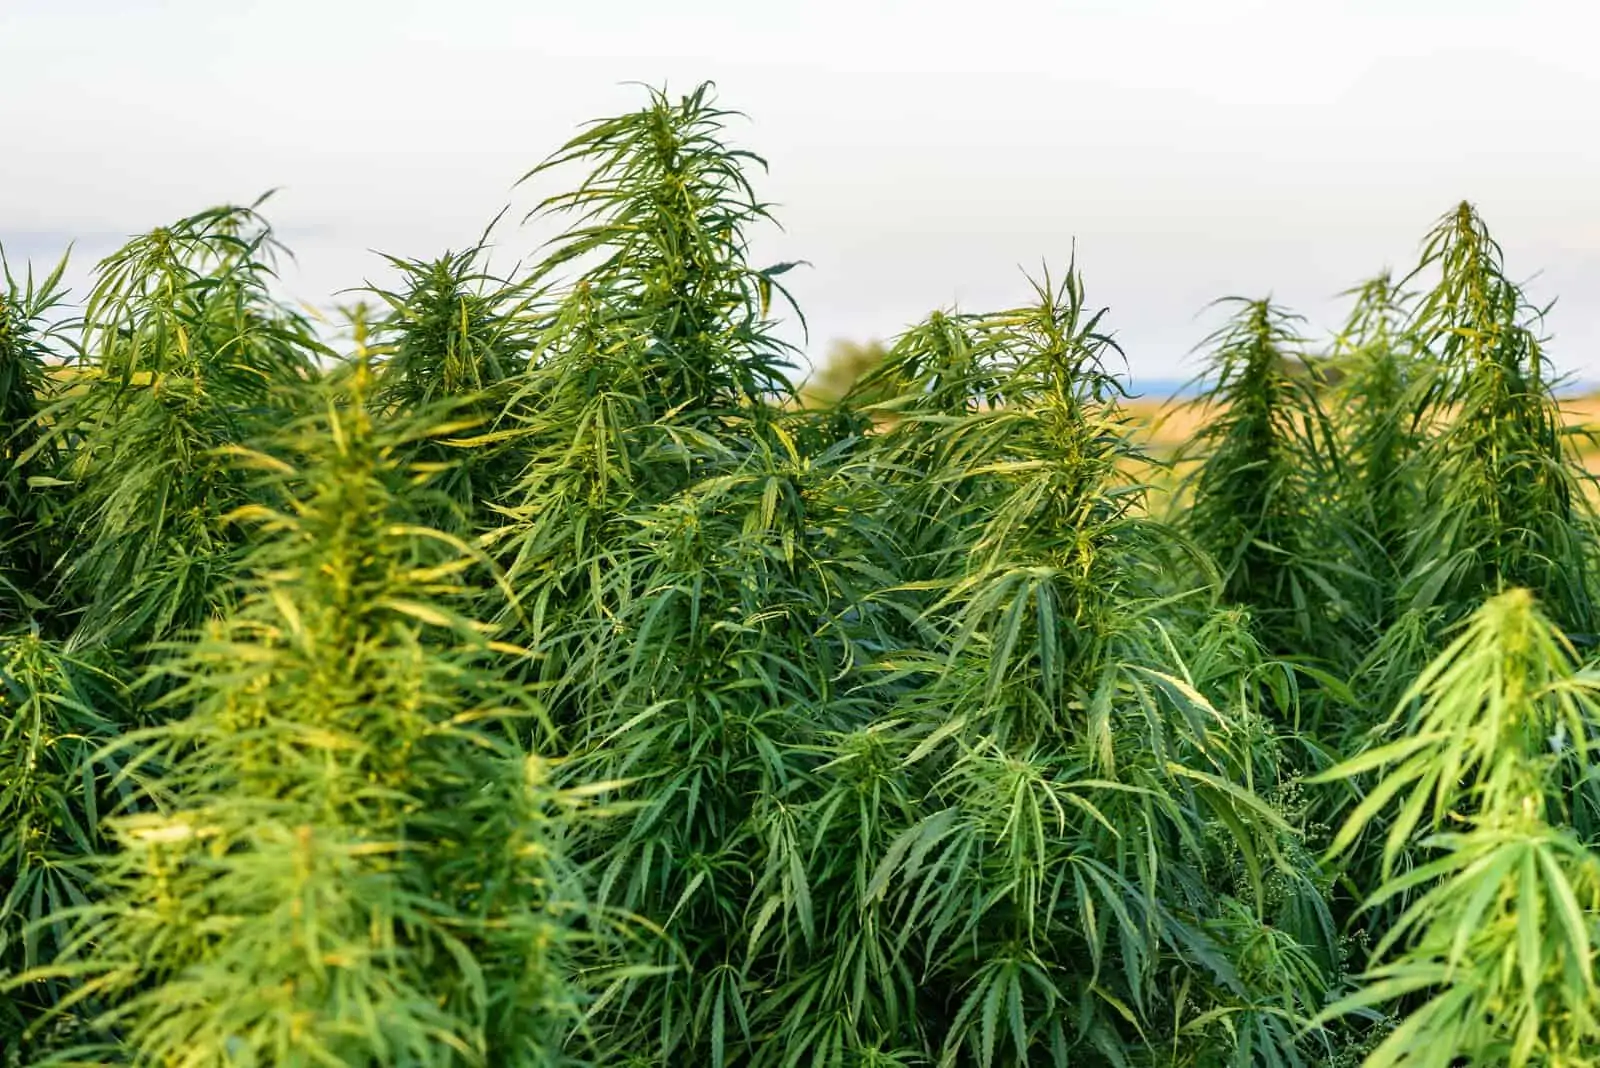 DEA To Grow 3.2 Million Grams Of Cannabis In 2020